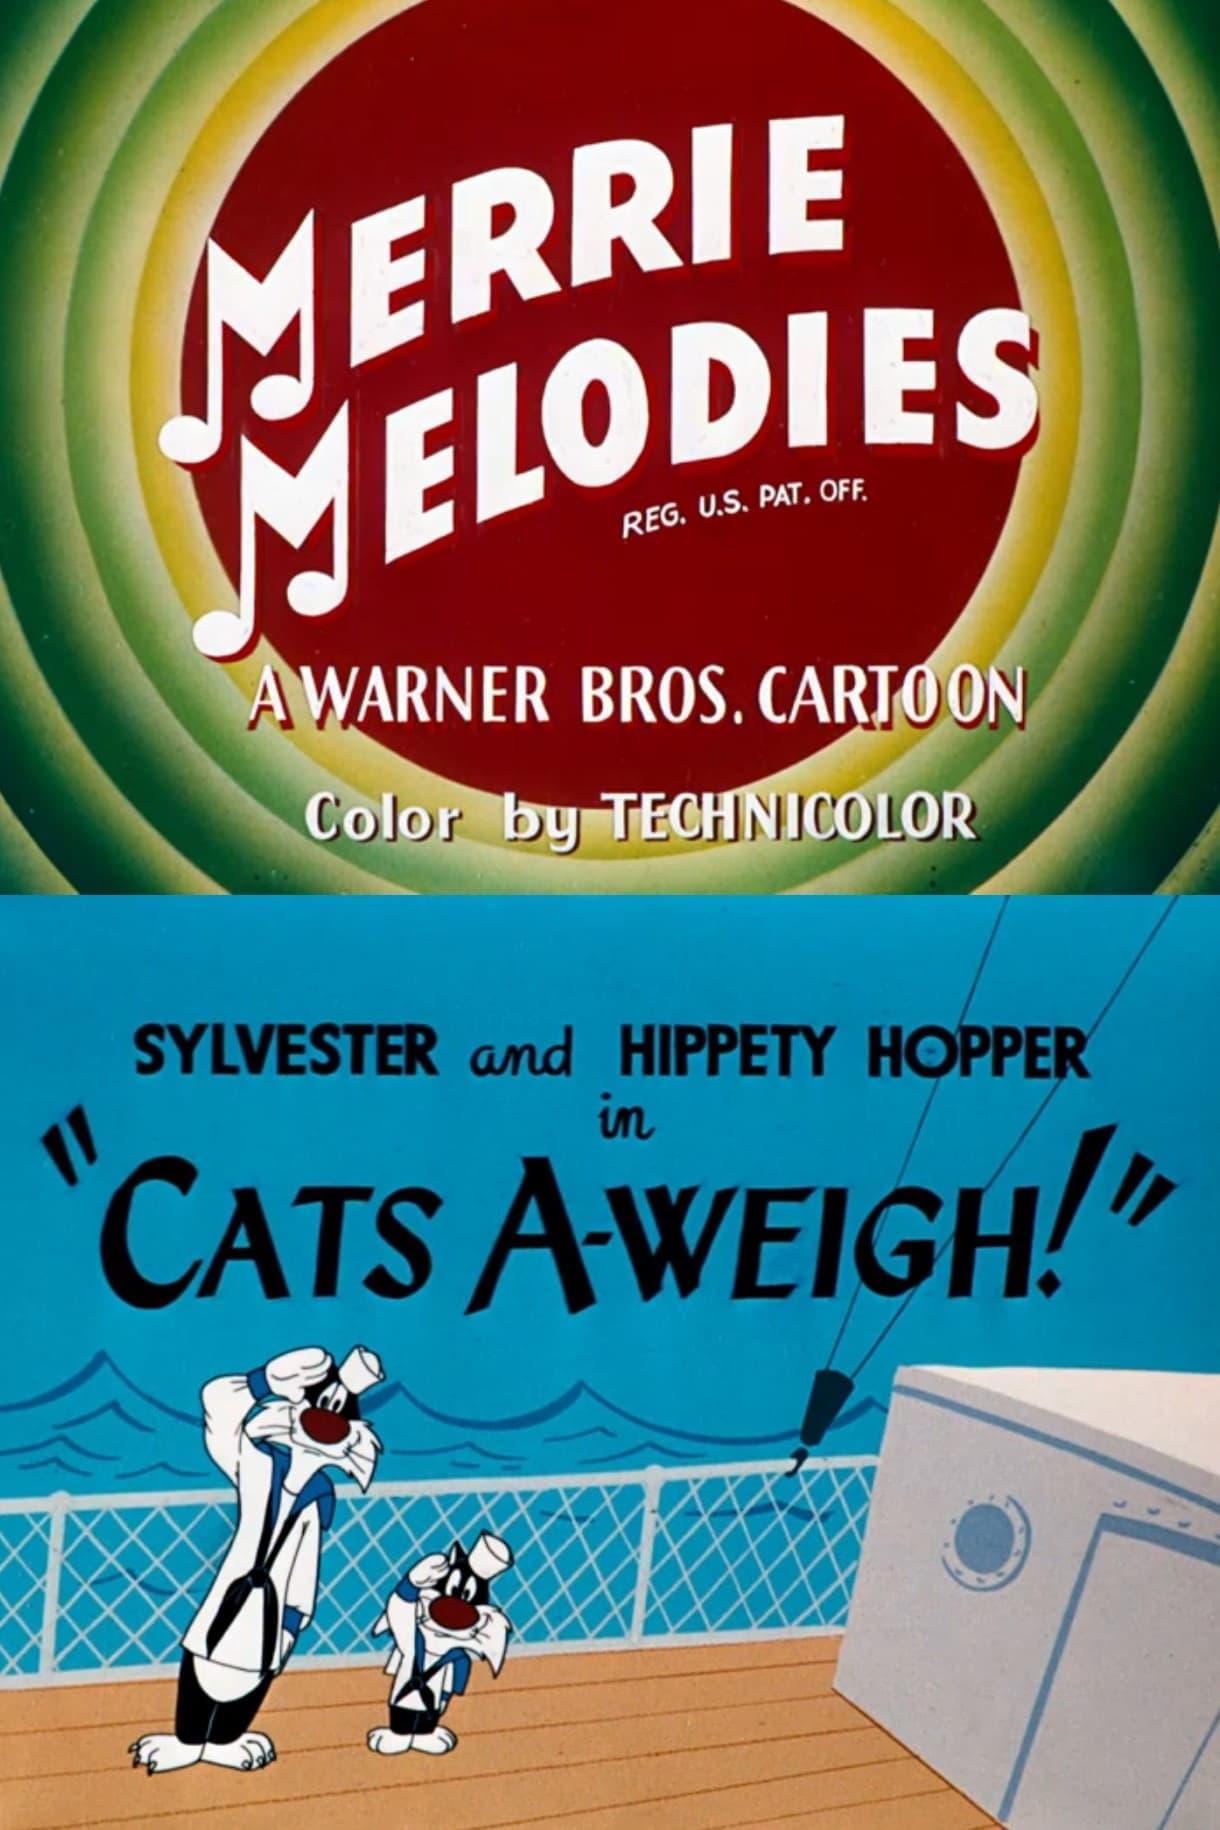 Cats A-Weigh! poster